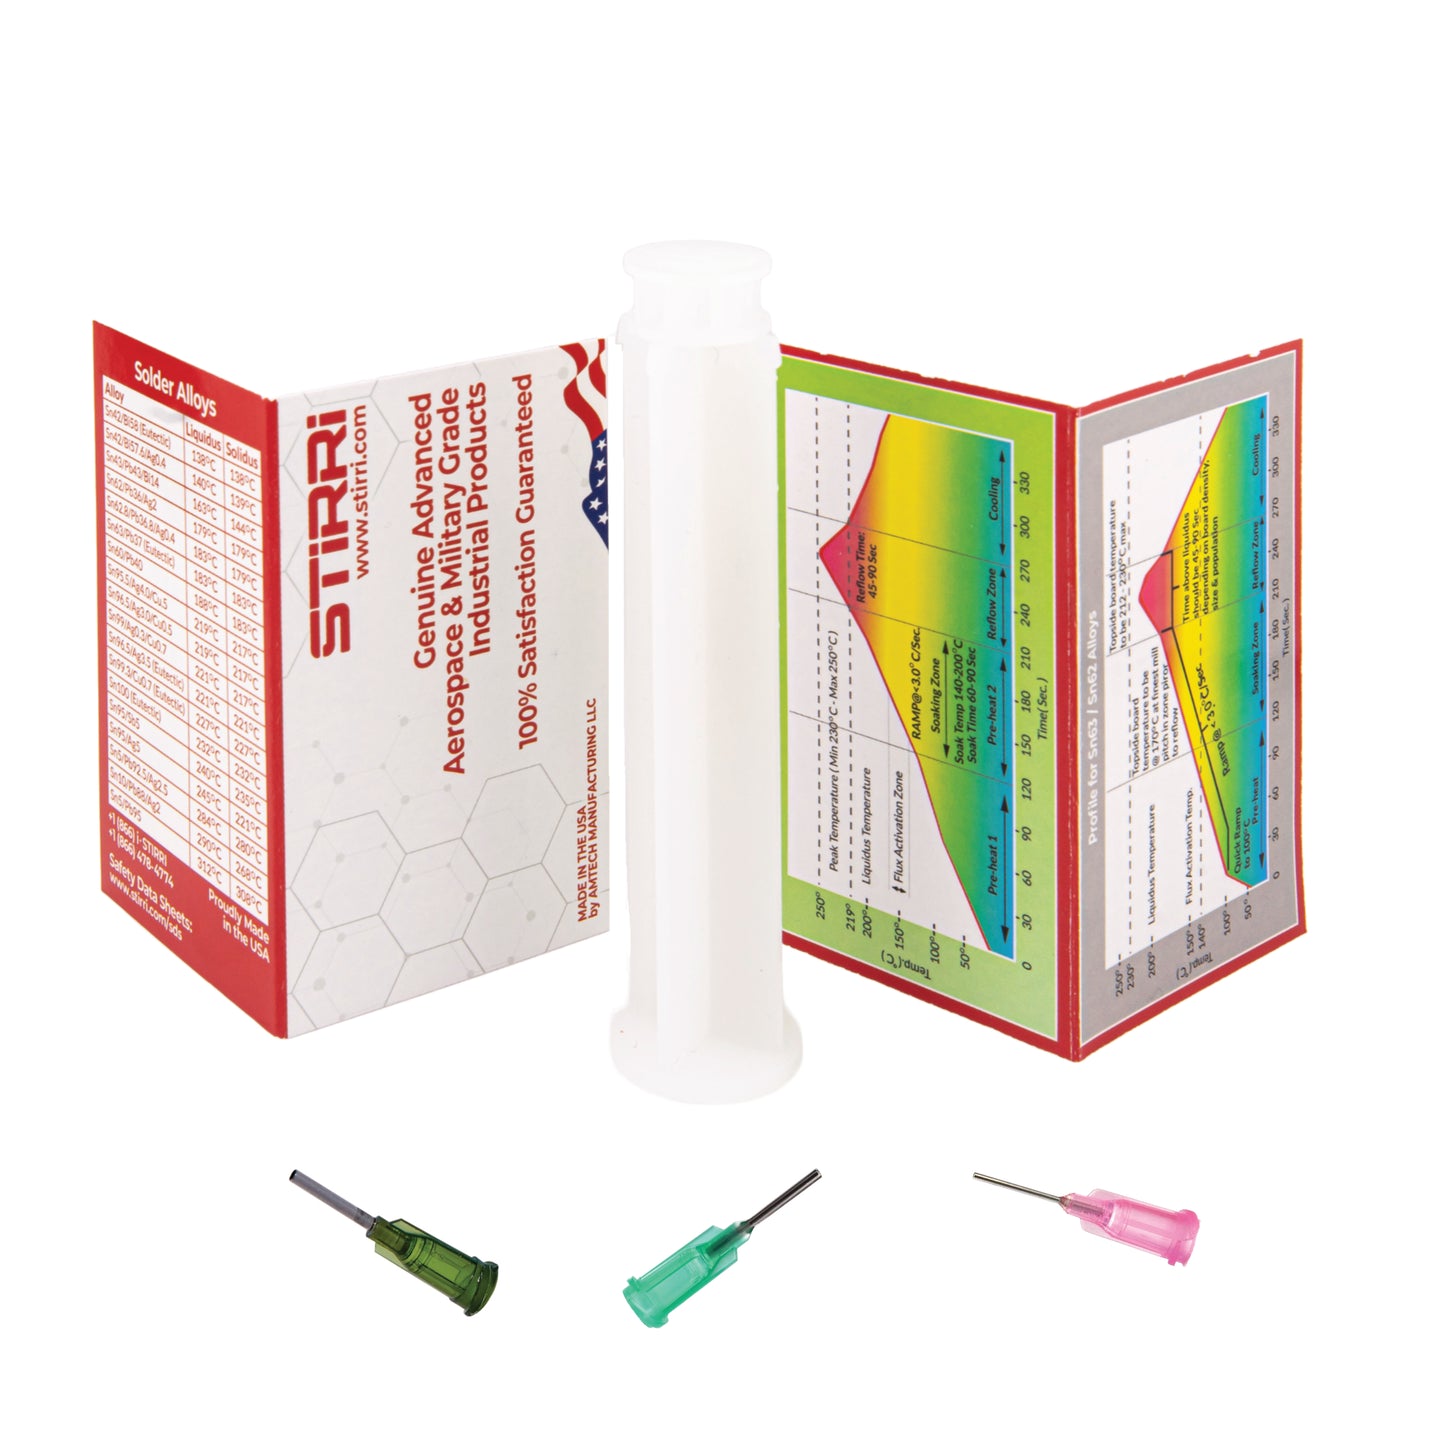 Manual Dispensing Kit for pneumatic syringe tubes and air pistons